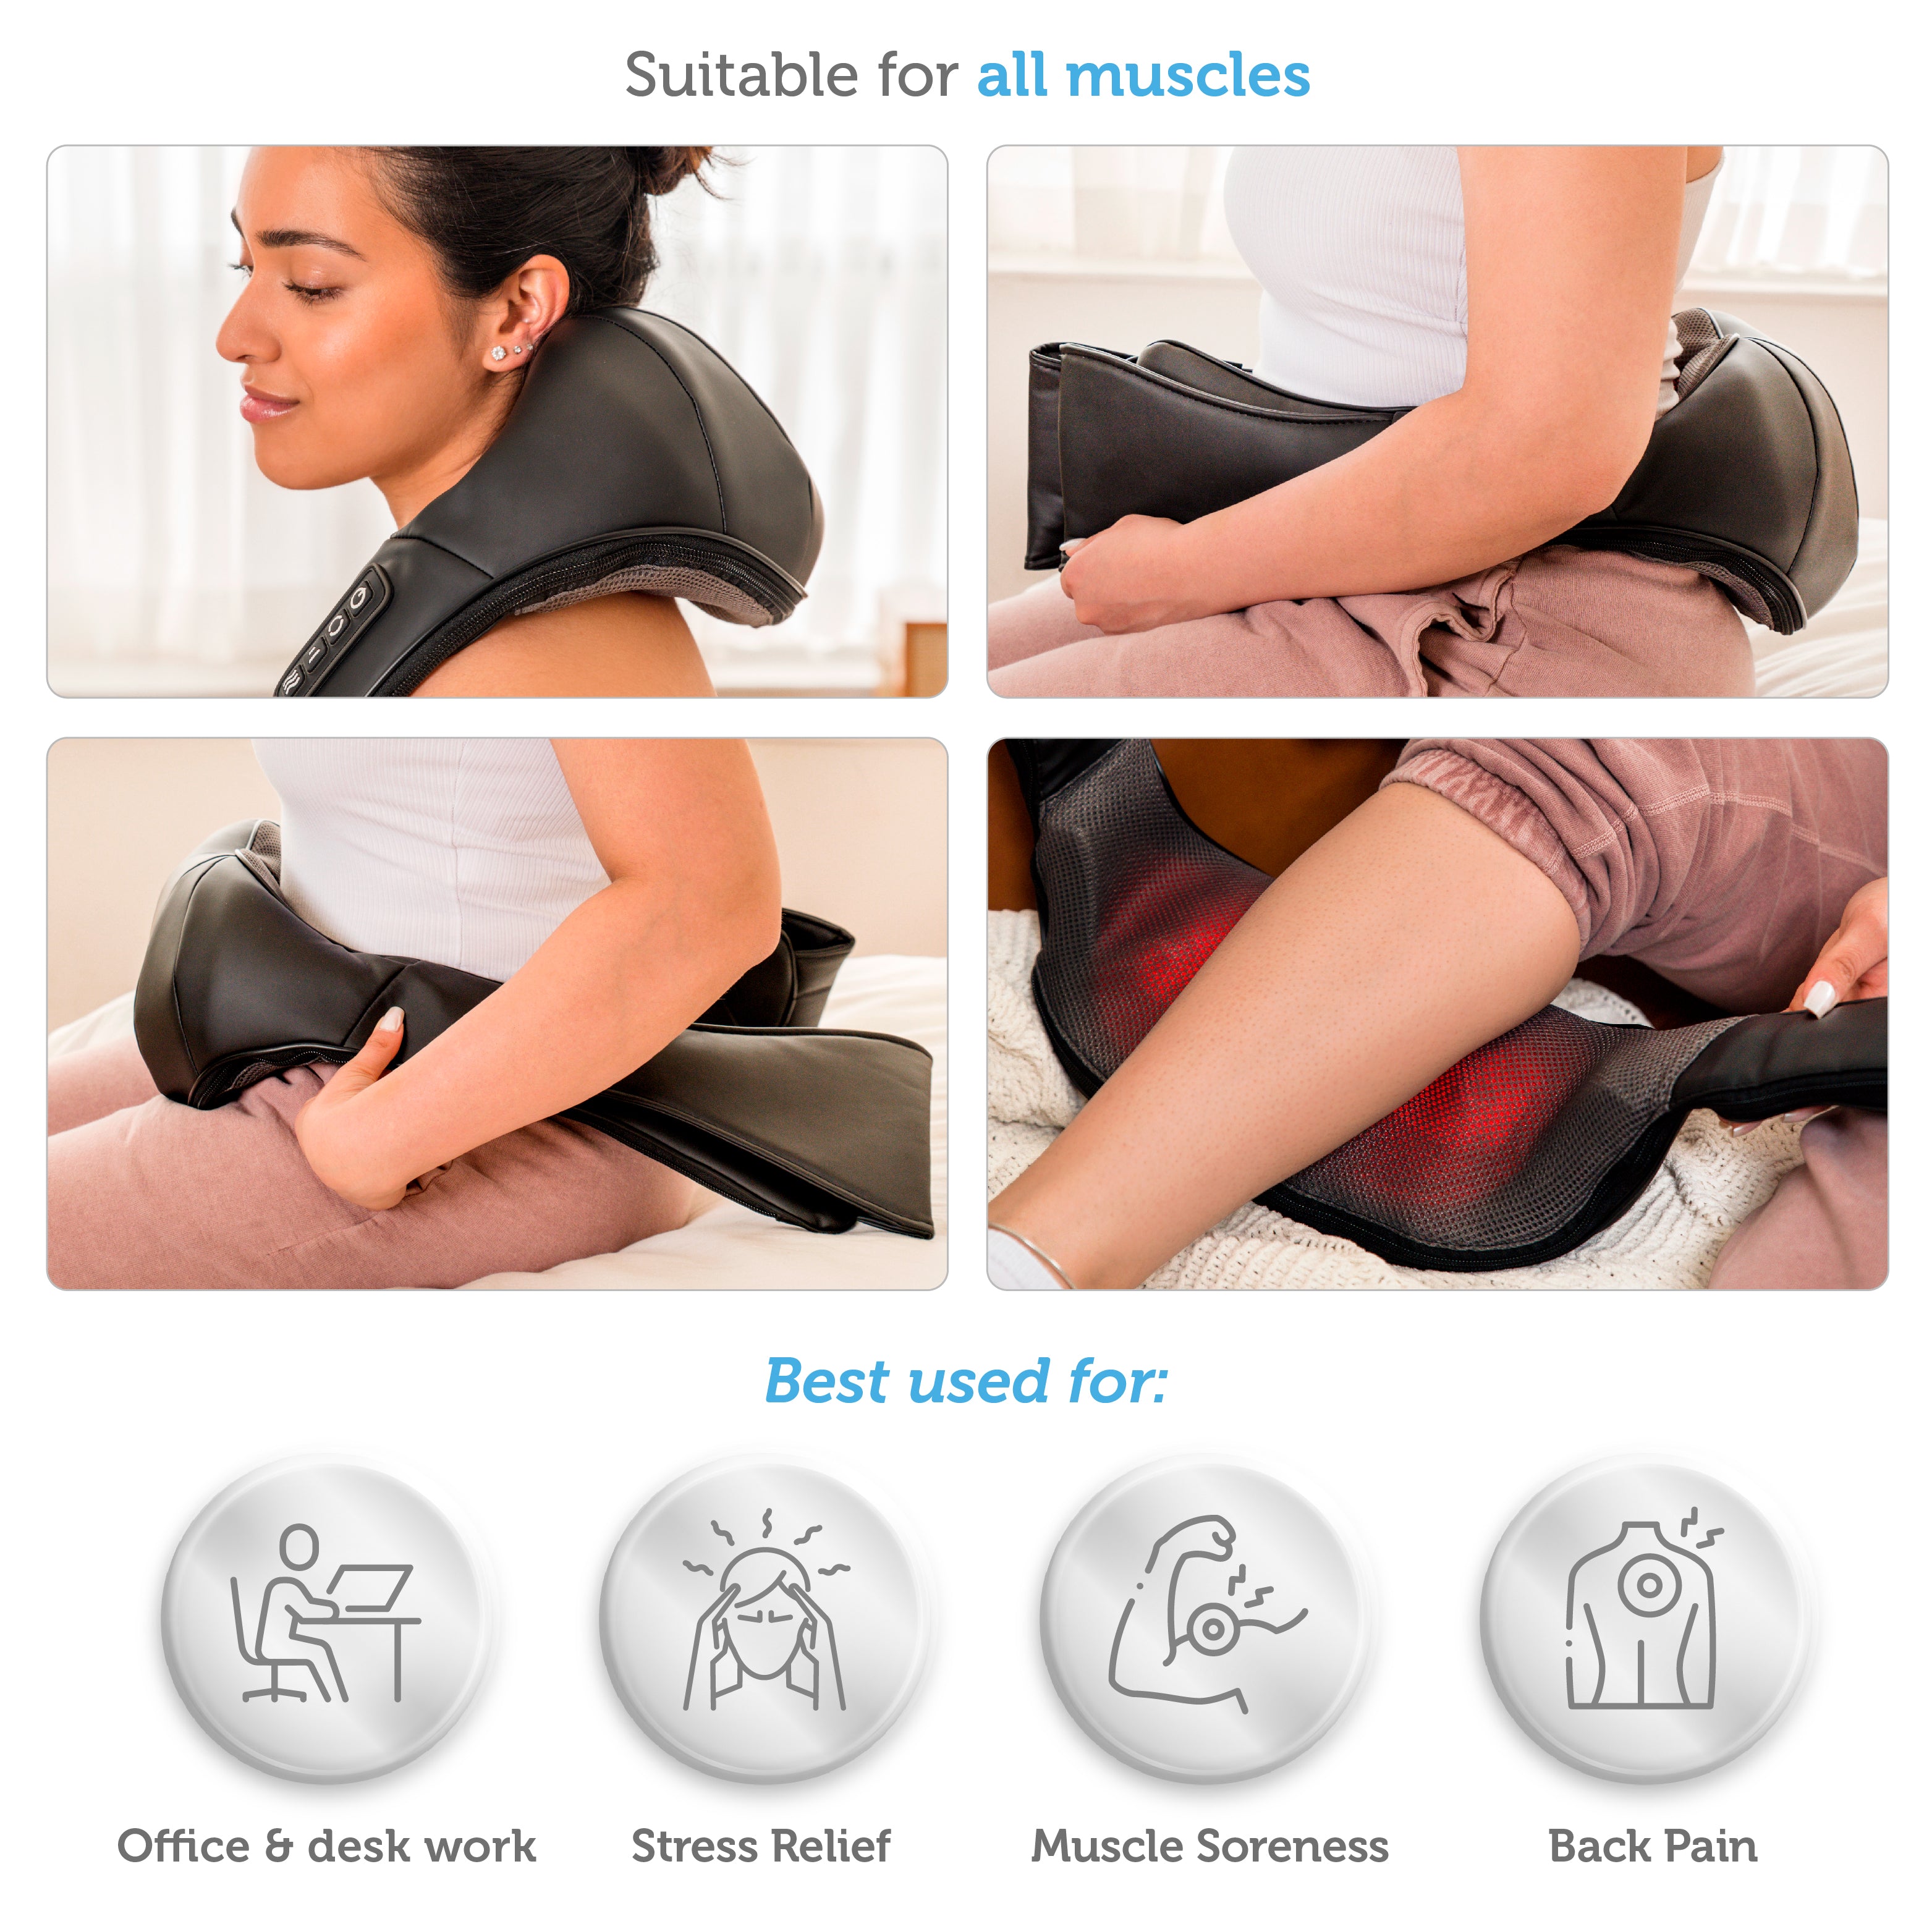 Comfier Shiatsu Neck and Shoulder Back Massager,Massage Pillow with Heat,Best Gift for Men/Women/Mom/Dad - 6302